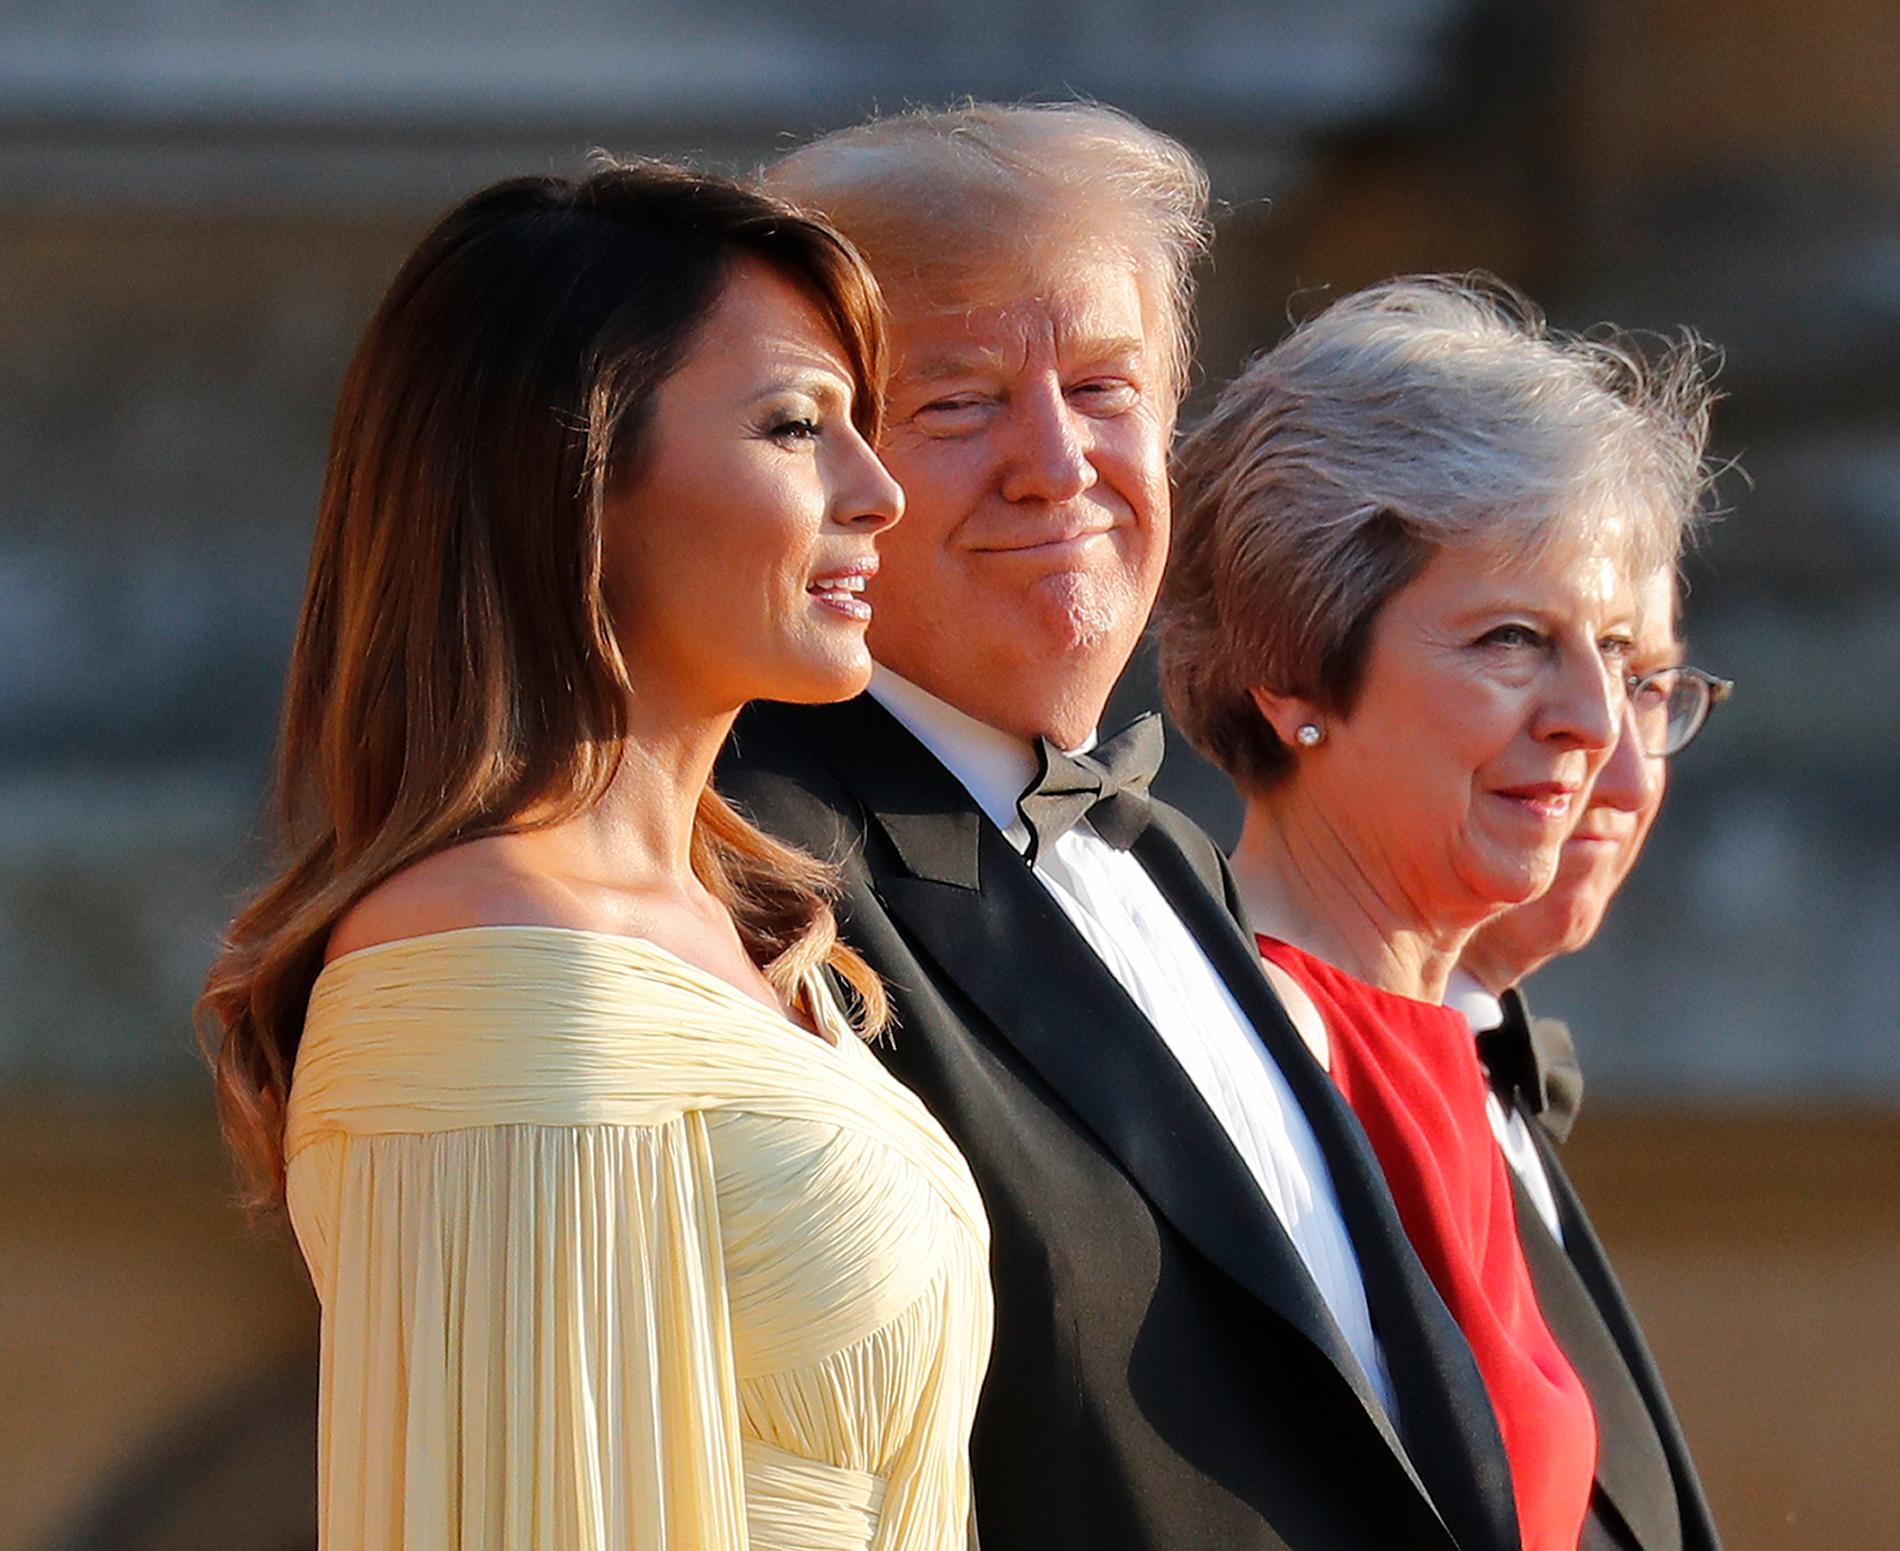 Førstedame Melania Trump, president Donald Trump, britenes statsminister Theresa May og hennes mann Philip May før gallamiddagen i Blenheim Palace i Oxfordshire torsdag. Foto: Pablo Martinez Monsivais / AP / NTB scanpix